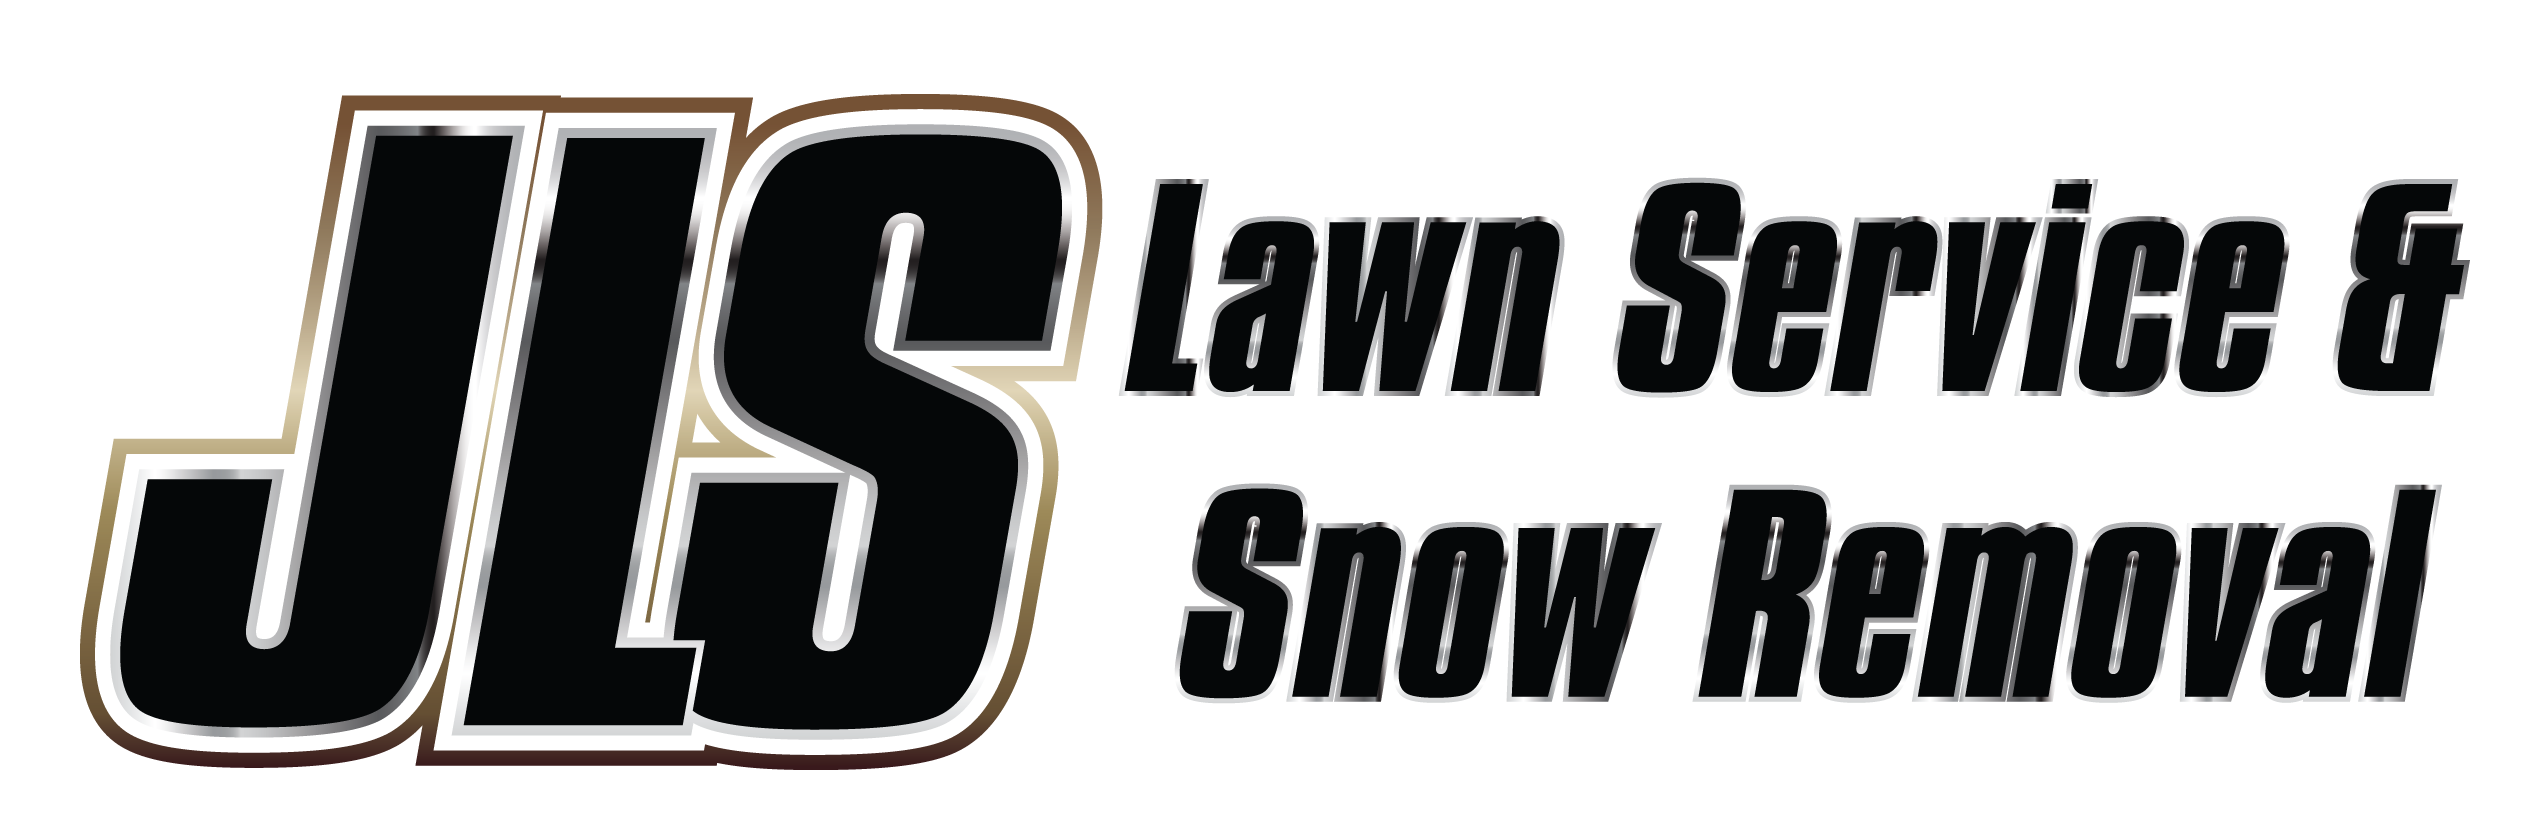 Jls Lawn Care Snow Removal Prior, Jls Landscaping Coconut Creek